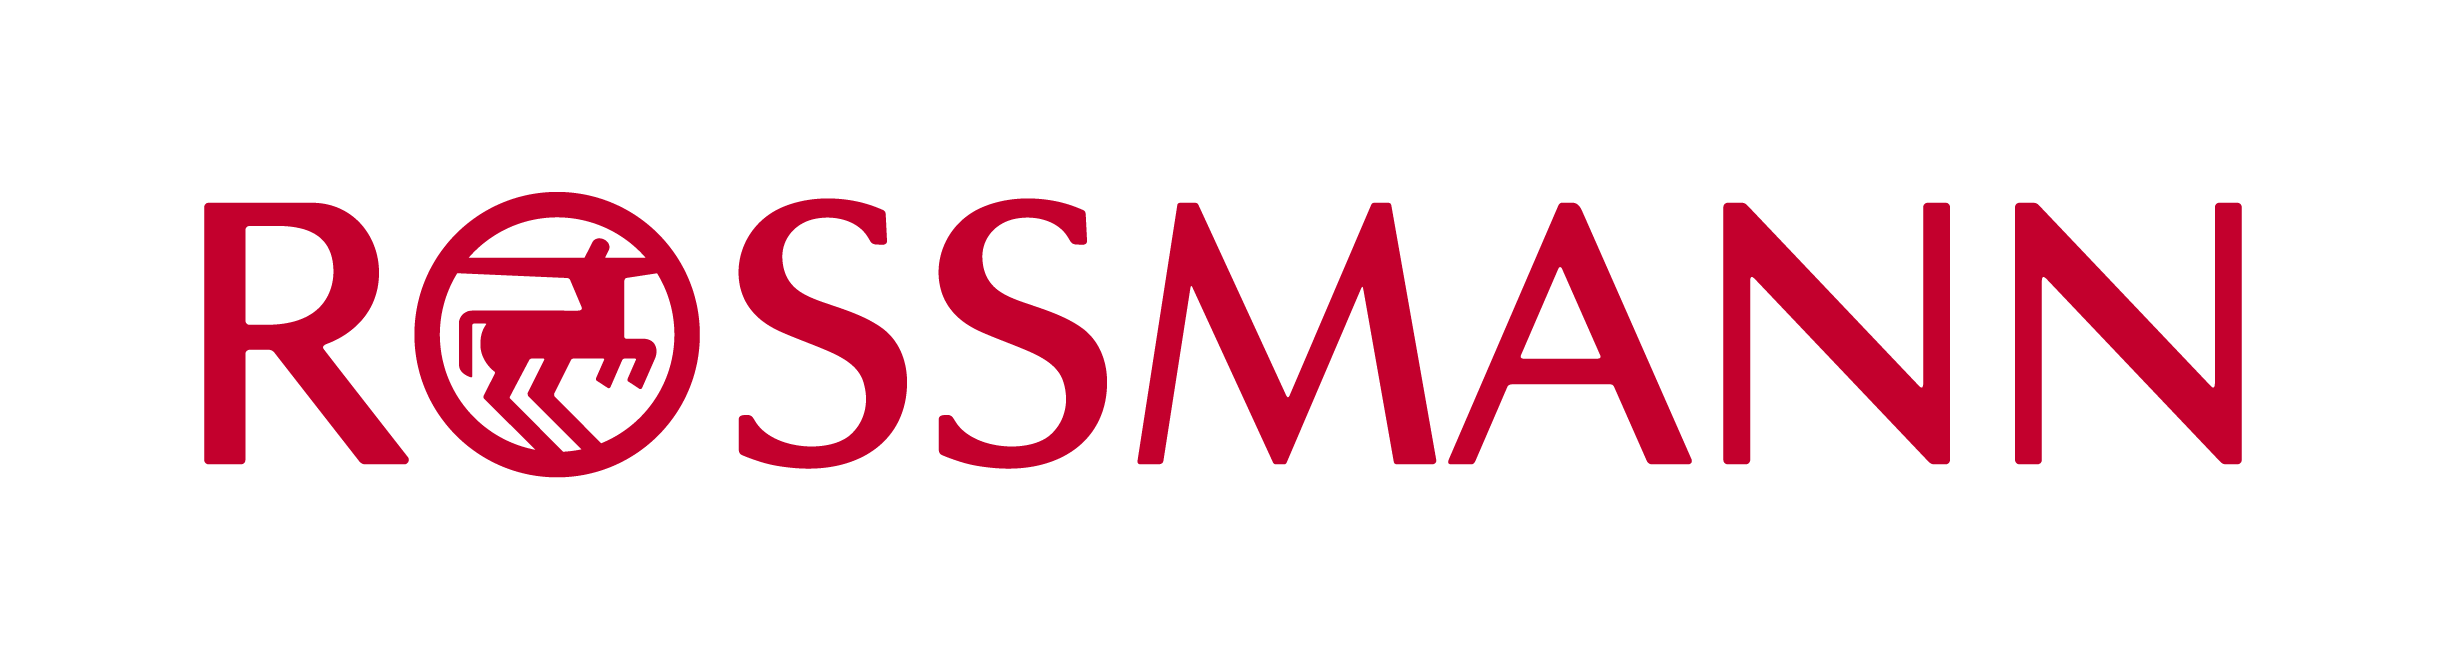 Rossmann - logo